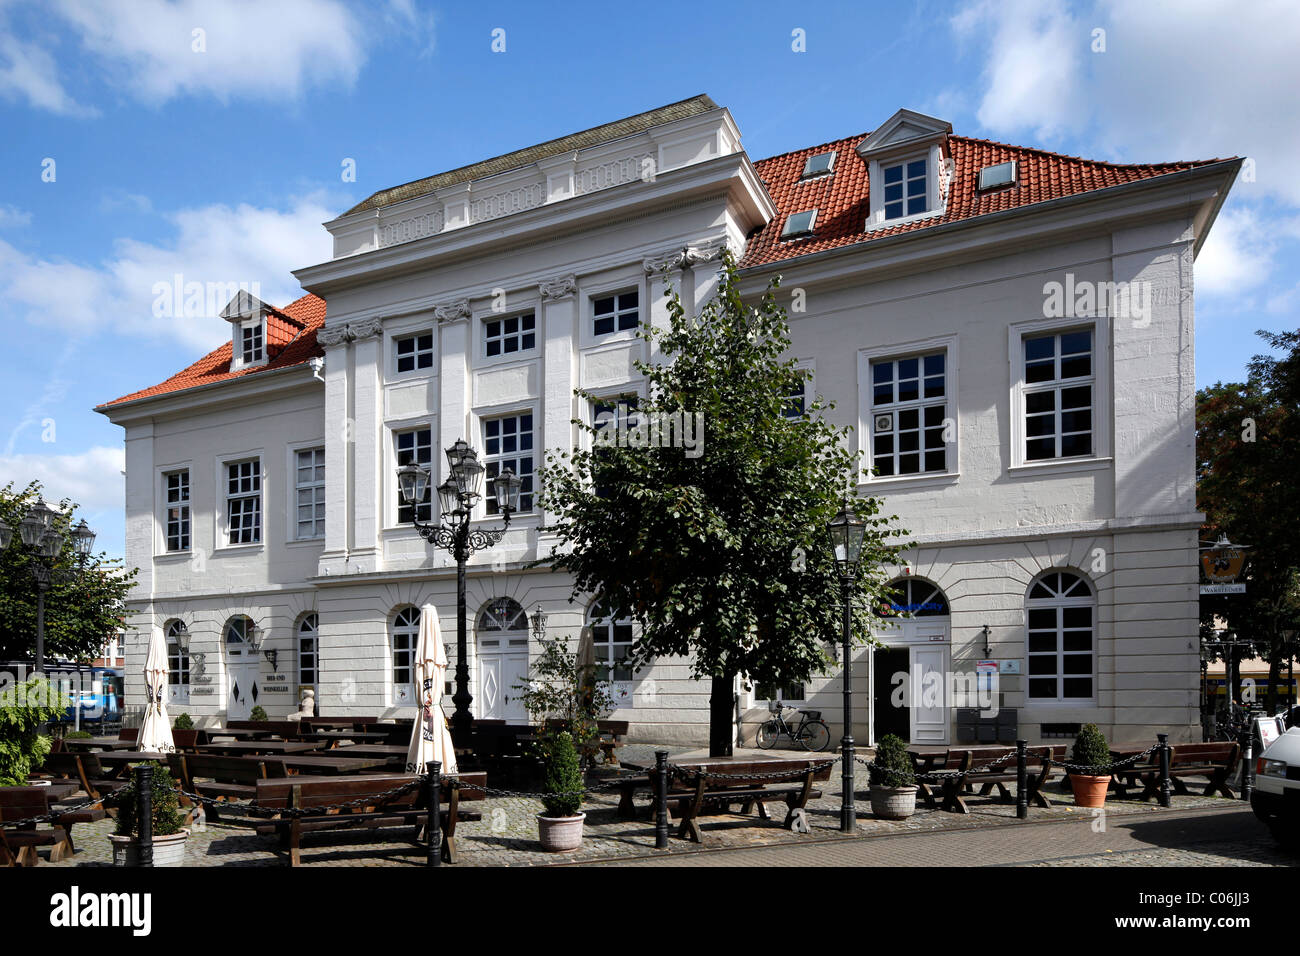 Neustadtrathaus building with restaurants, Braunschweig, Lower Saxony, Germany, Europe Stock Photo